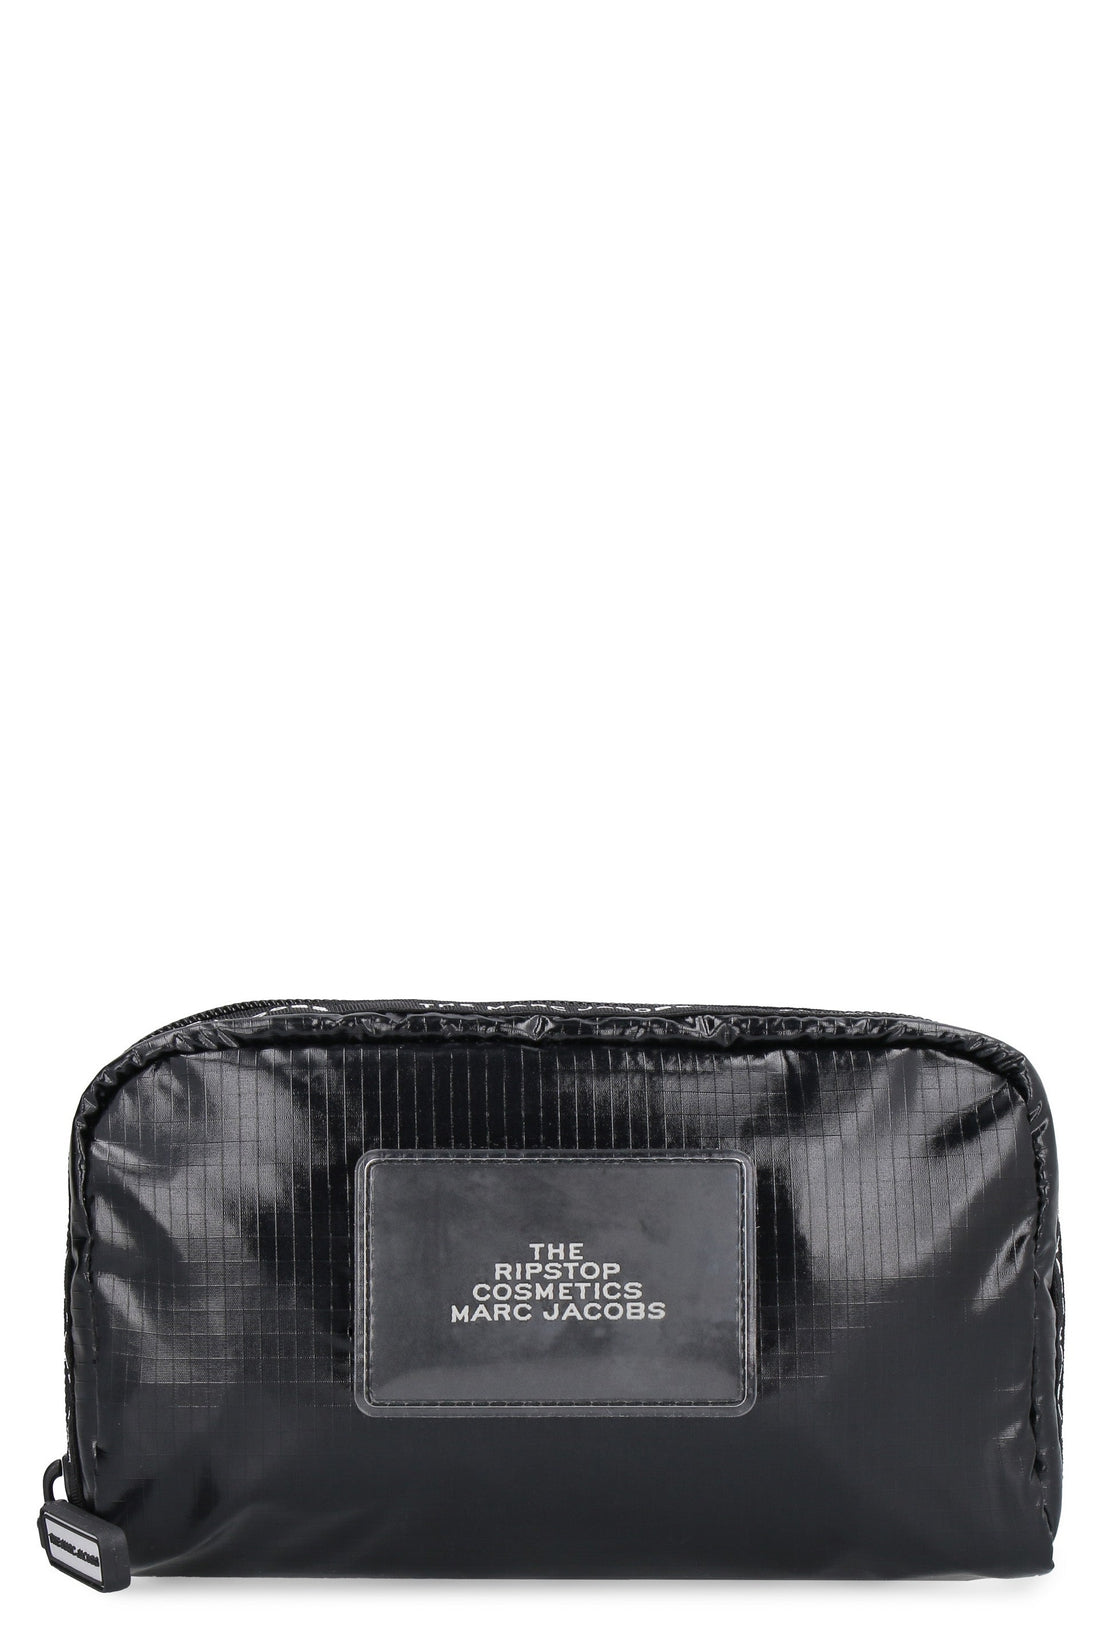 Marc Jacobs-OUTLET-SALE-The Ripstop nylon wash bag-ARCHIVIST